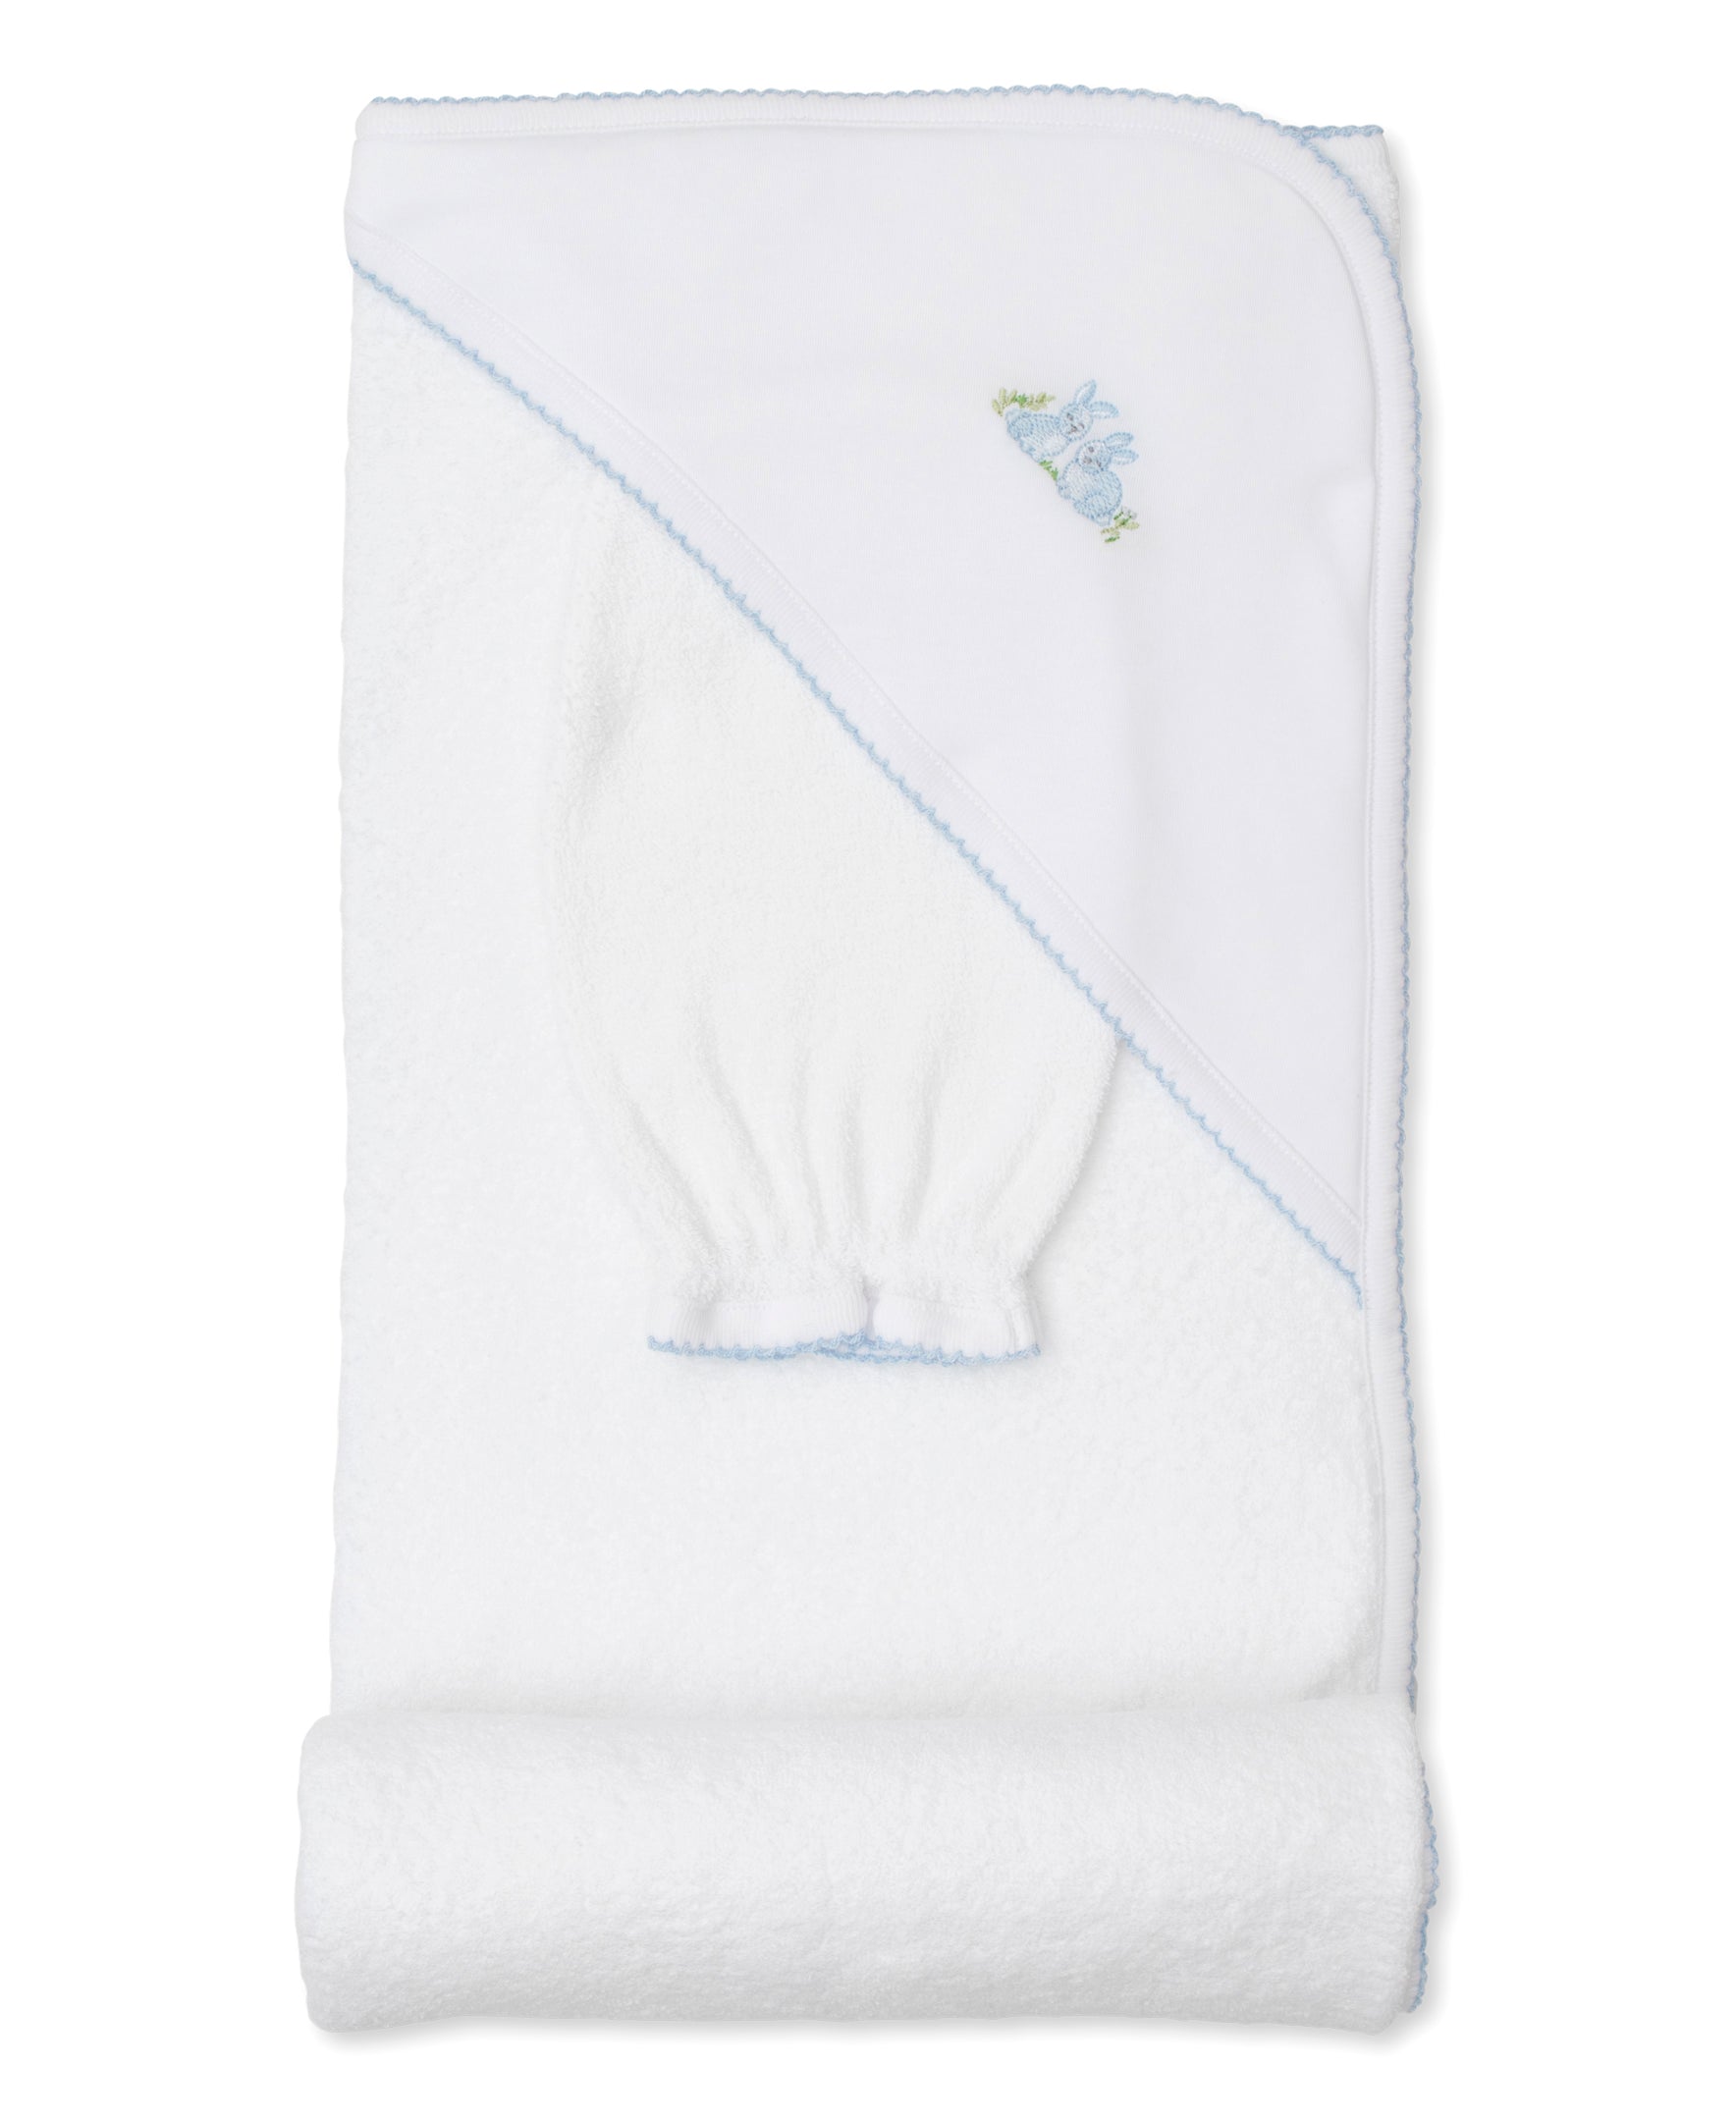 Cottontail Hollows Blue Hooded Towel & Mitt Set - Kissy Kissy